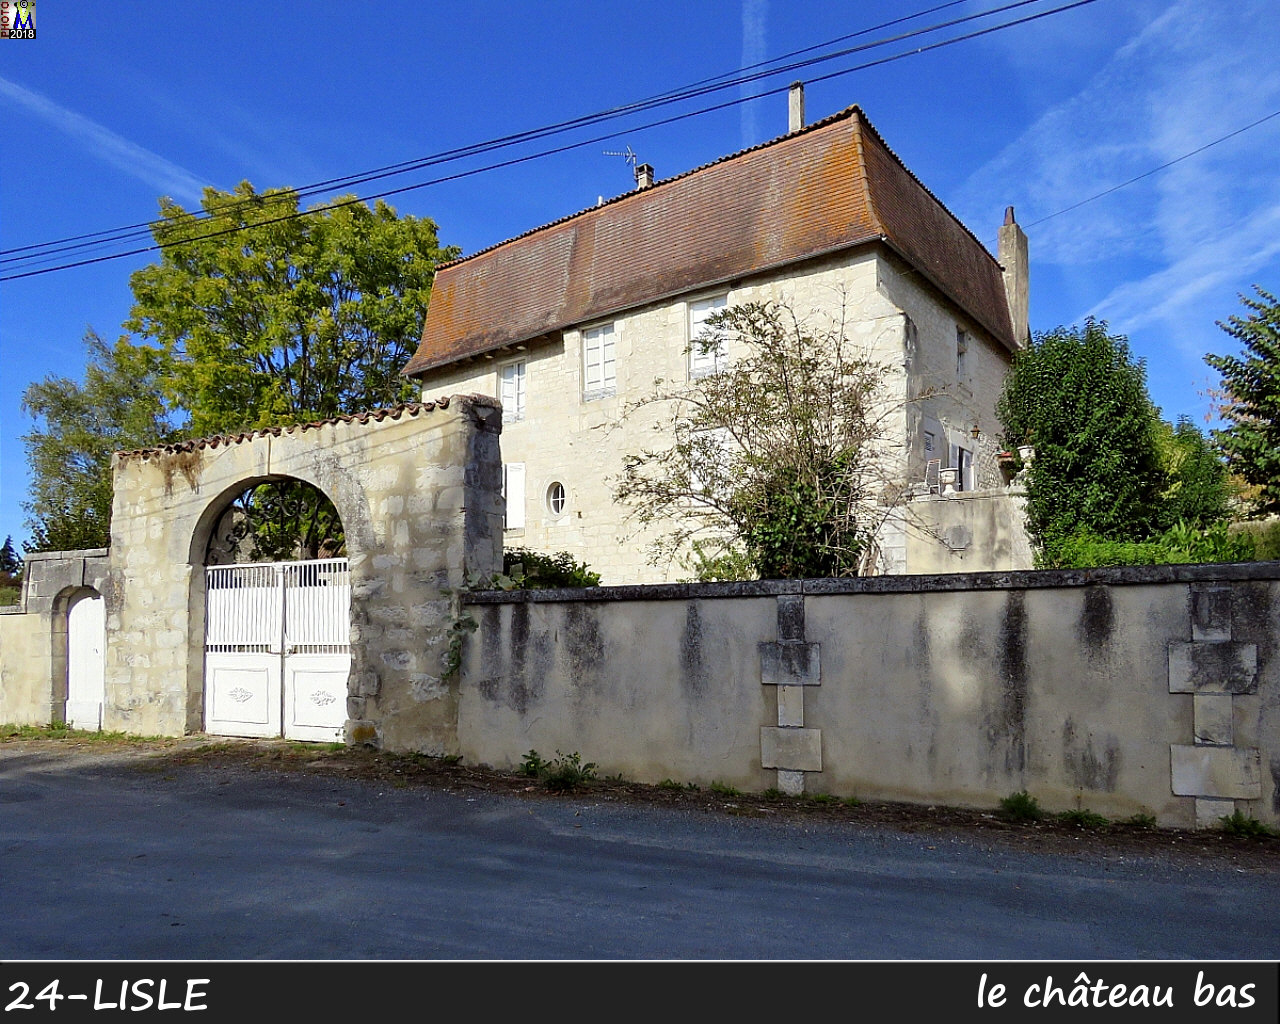 24LISLE_chateauB1000.jpg